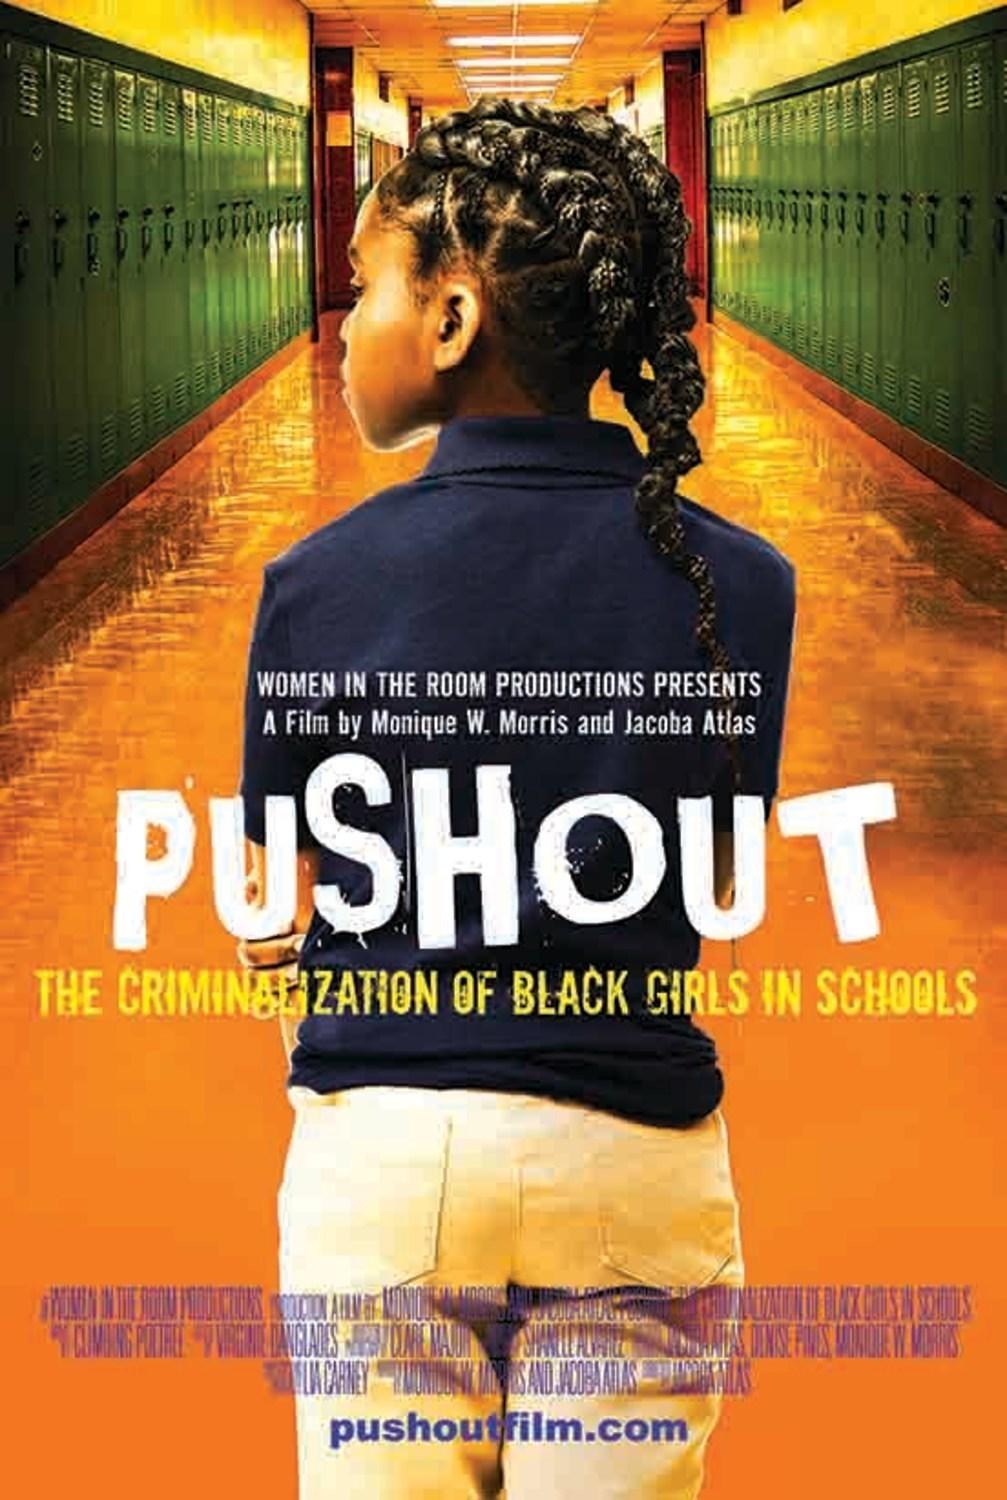 Pushout: The Criminalization of Black Girls in Schools Movie Screening 